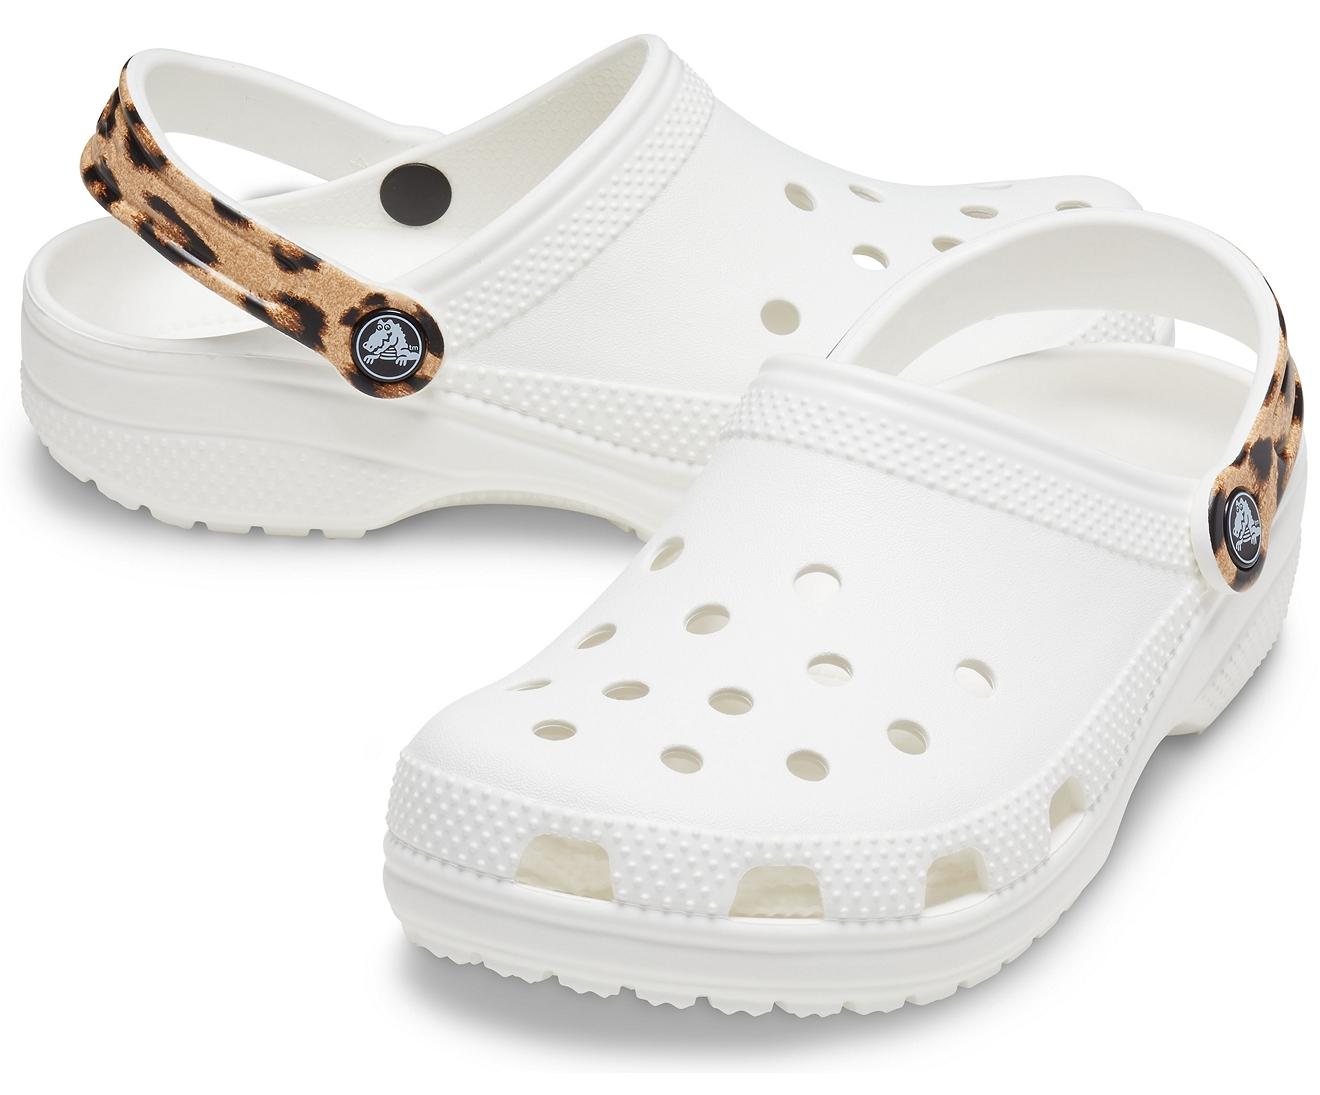 crocs with leopard strap